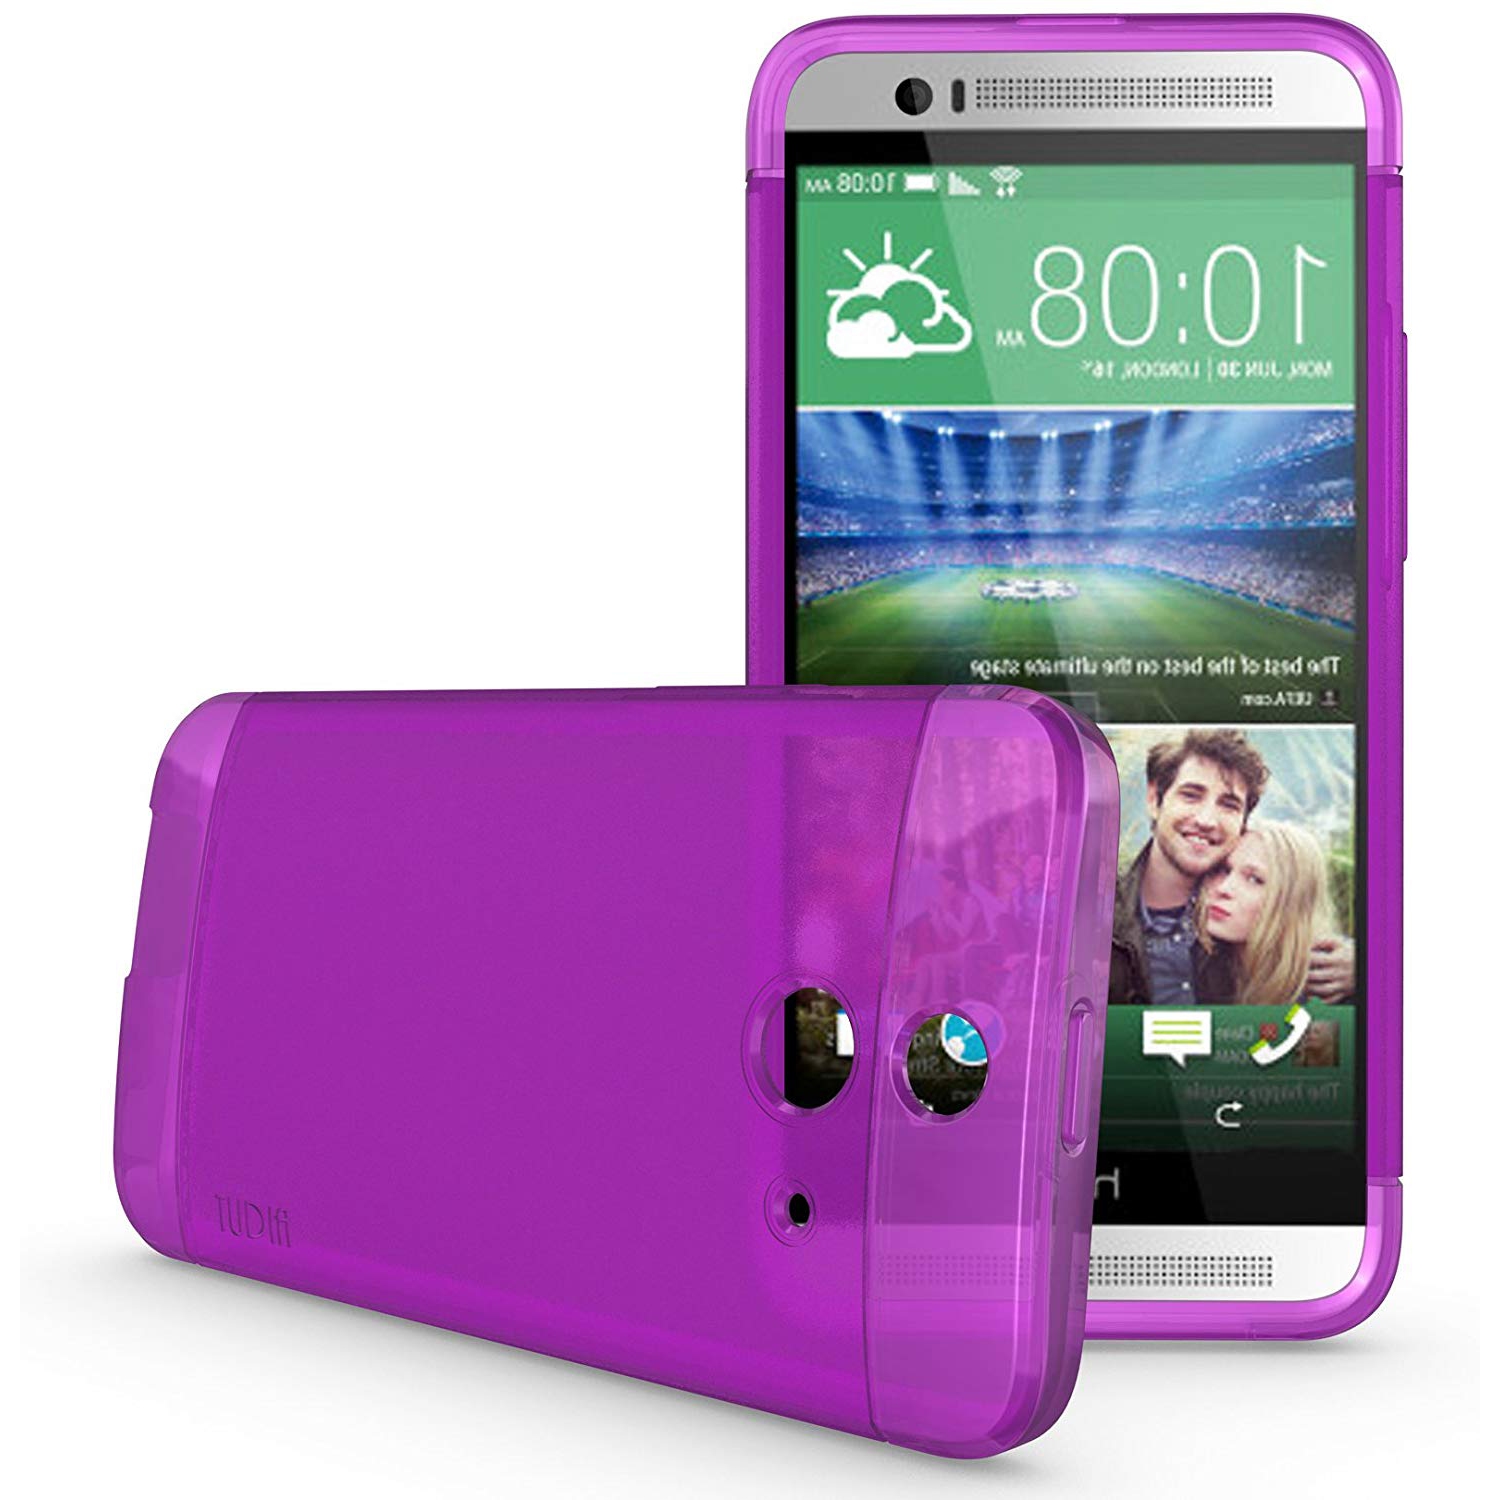 TUDIA Ultra Slim flexi skin [LITE] TPU Bumper Protective Case for HTC One (E8) (Purple)